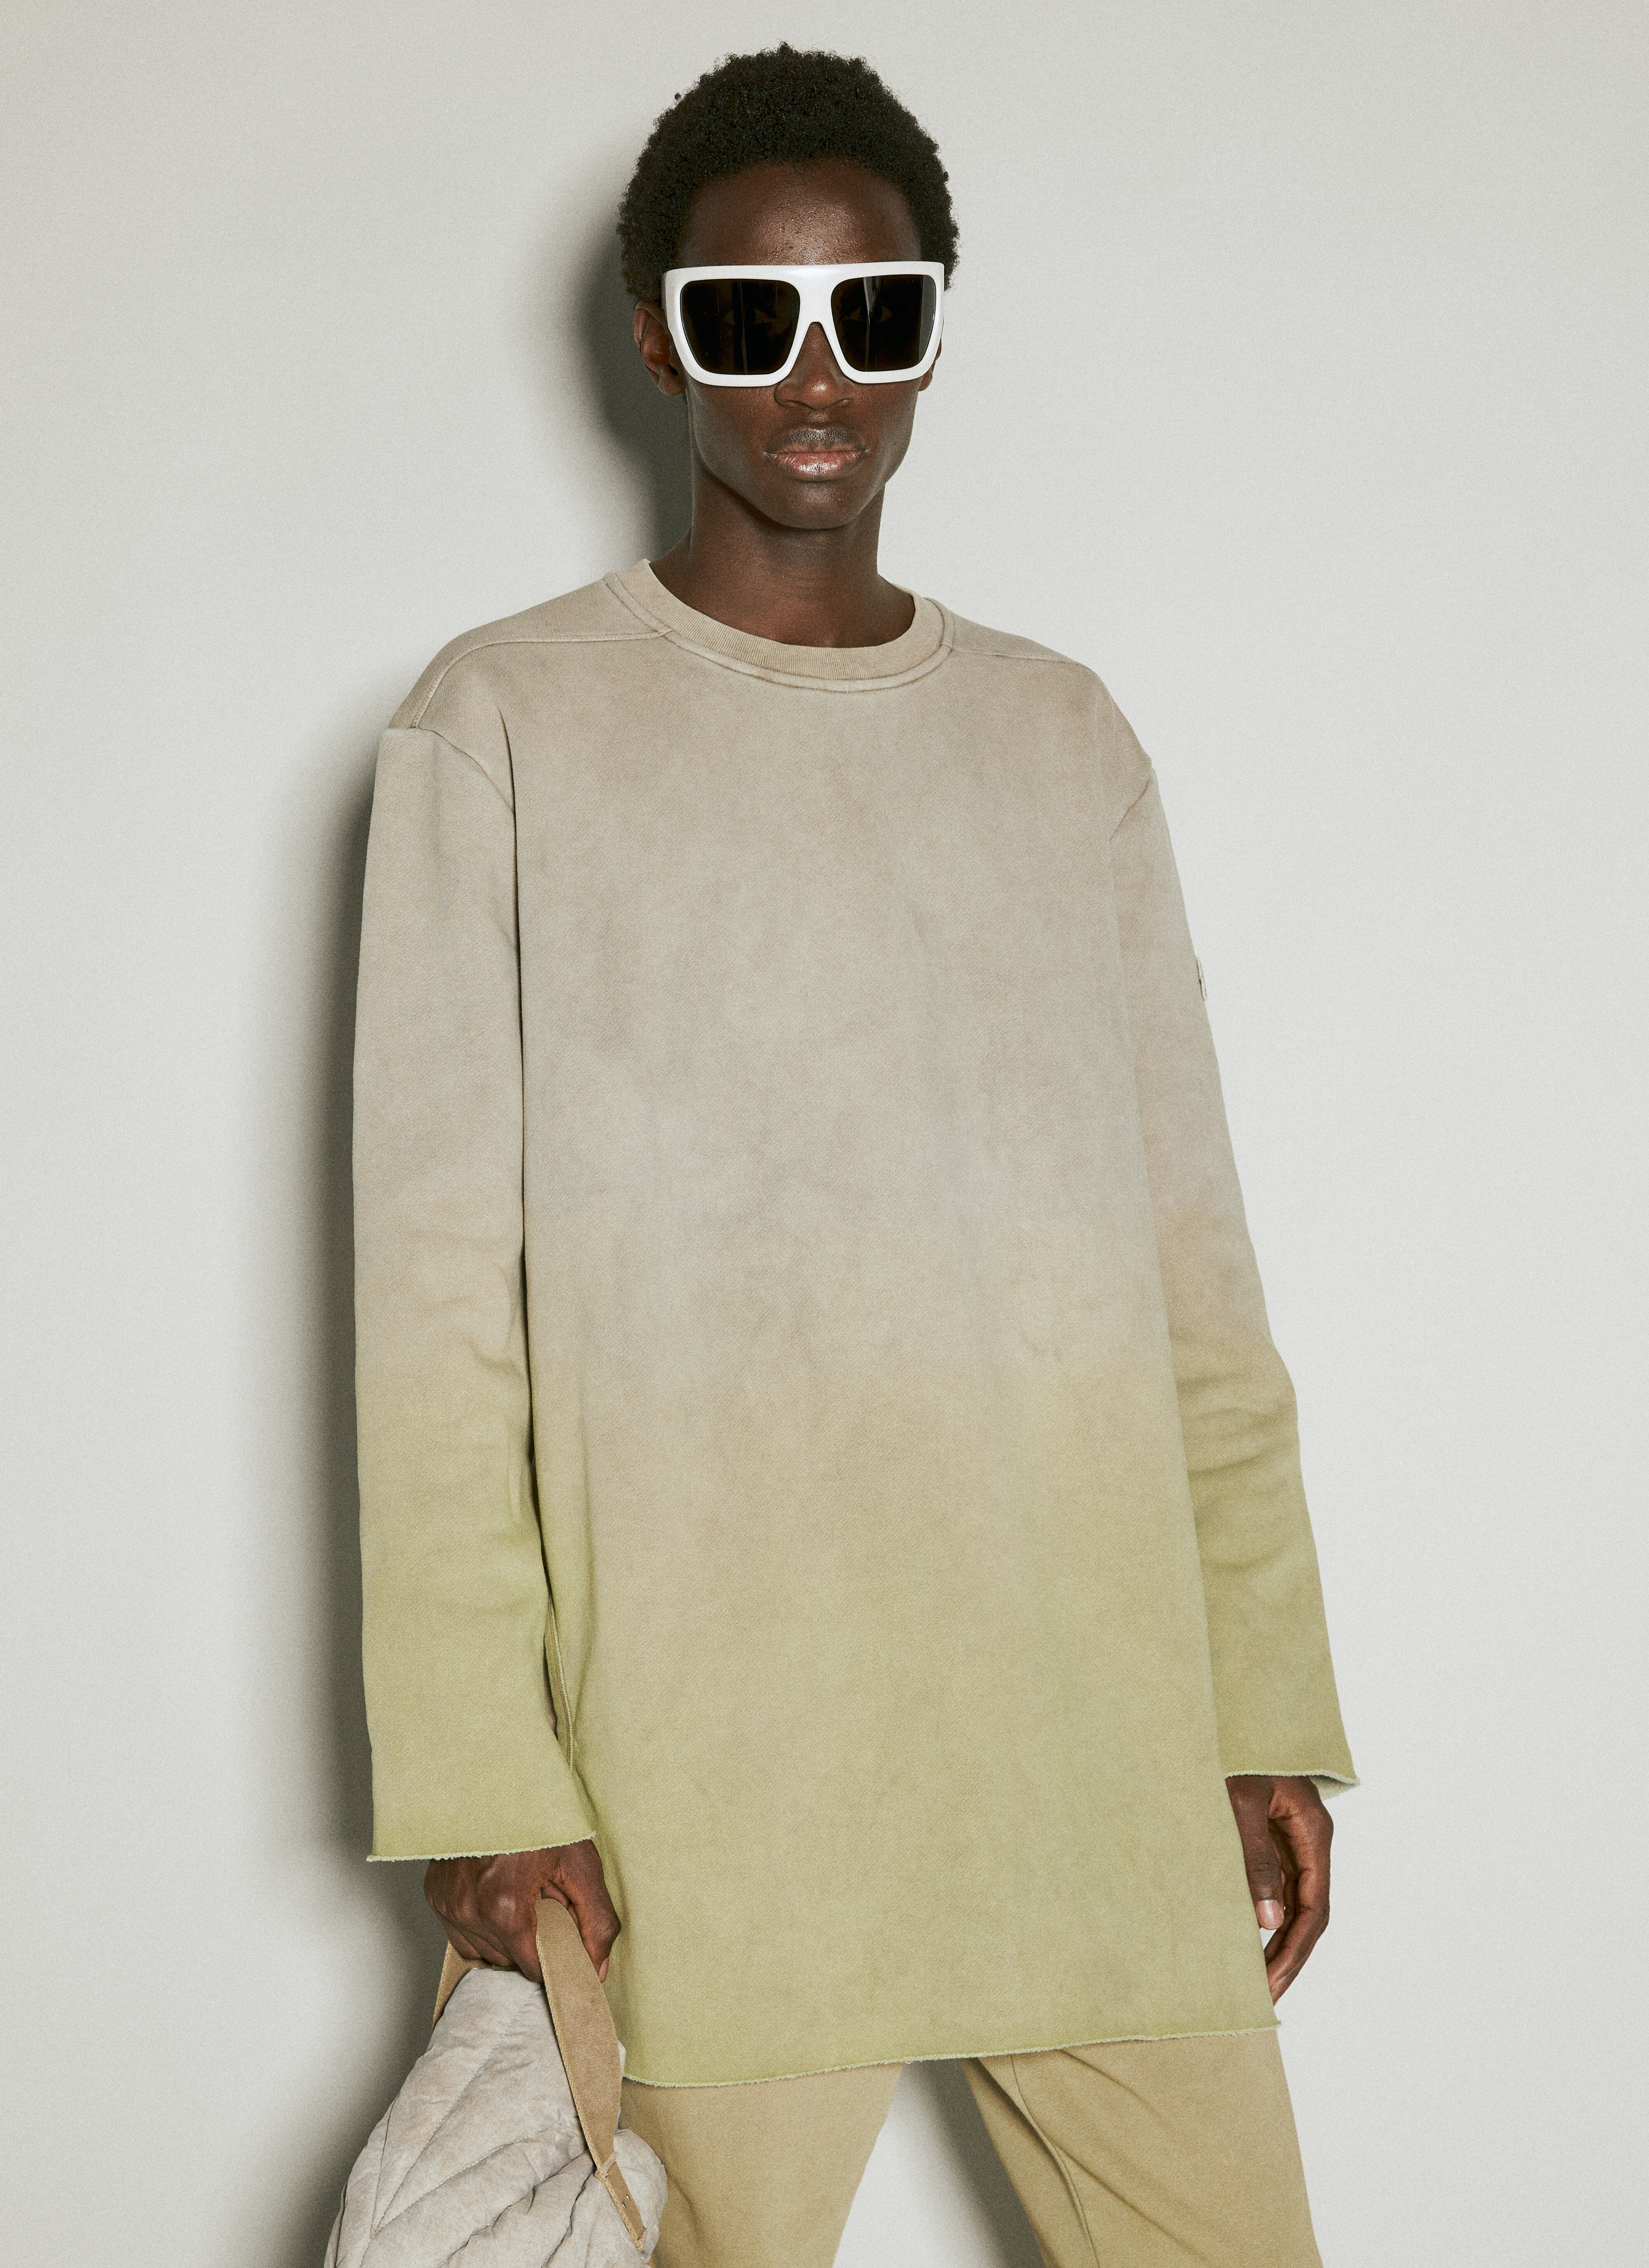 Moncler x Roc Nation designed by Jay-Z Subhuman Long Sweatshirt Black mrn0156002